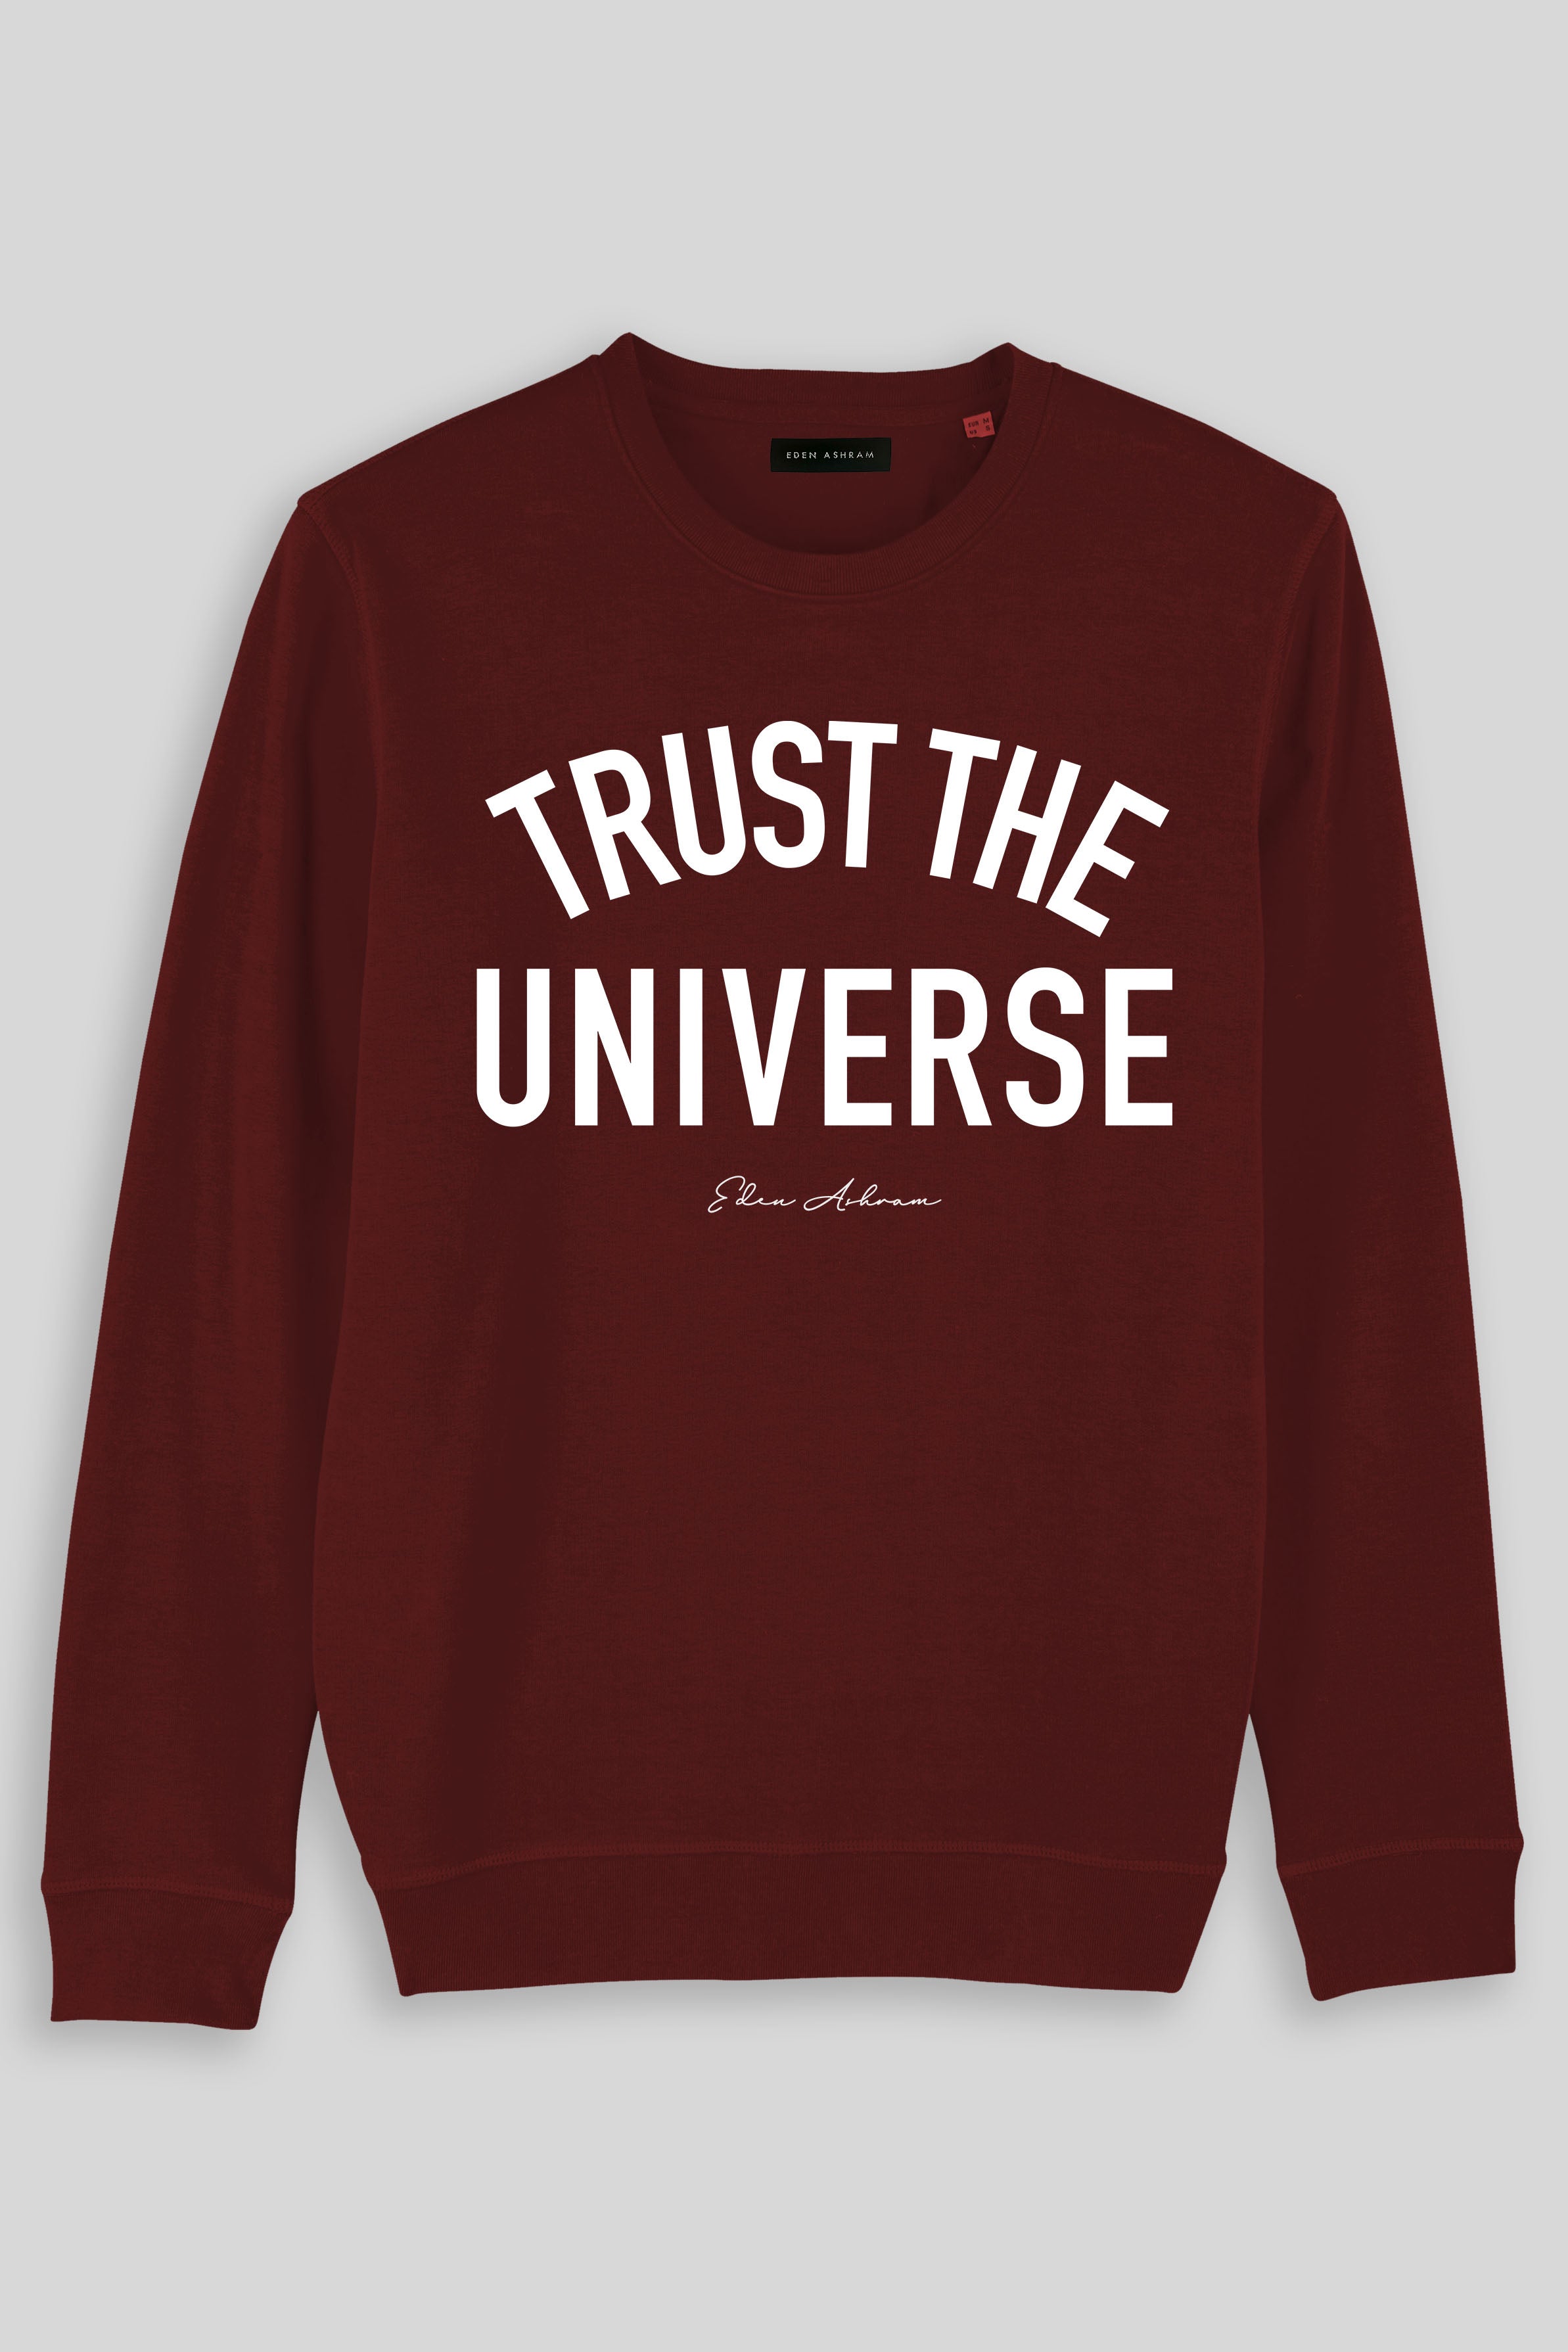 EDEN ASHRAM Trust The Universe Premium Crew Neck Sweatshirt Burgundy